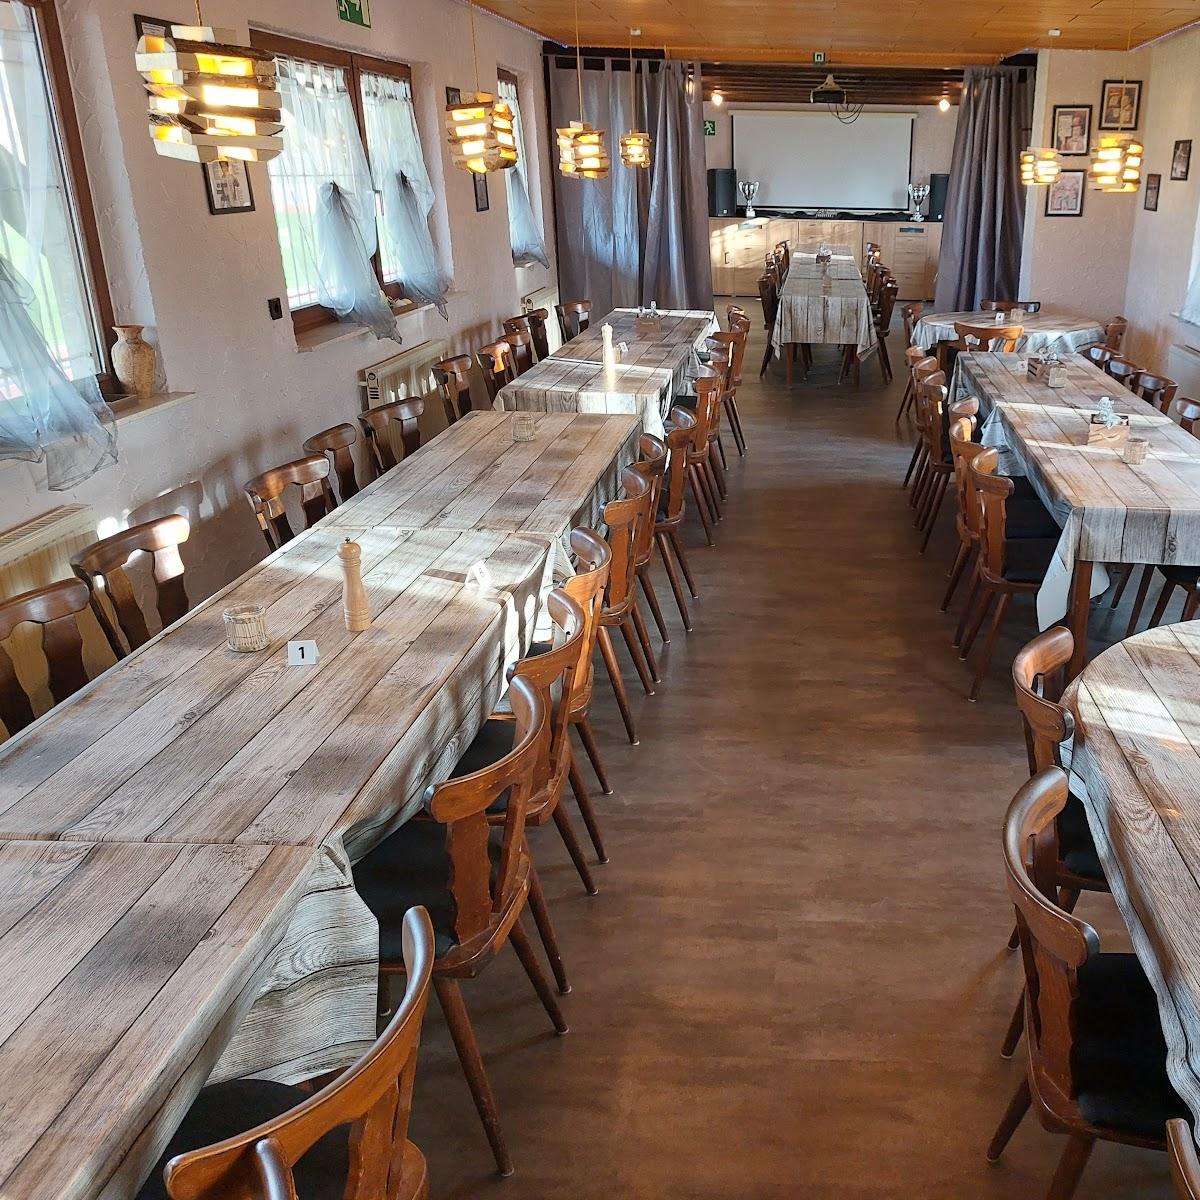 Restaurant "D10S La Braceria" in Lauffen am Neckar